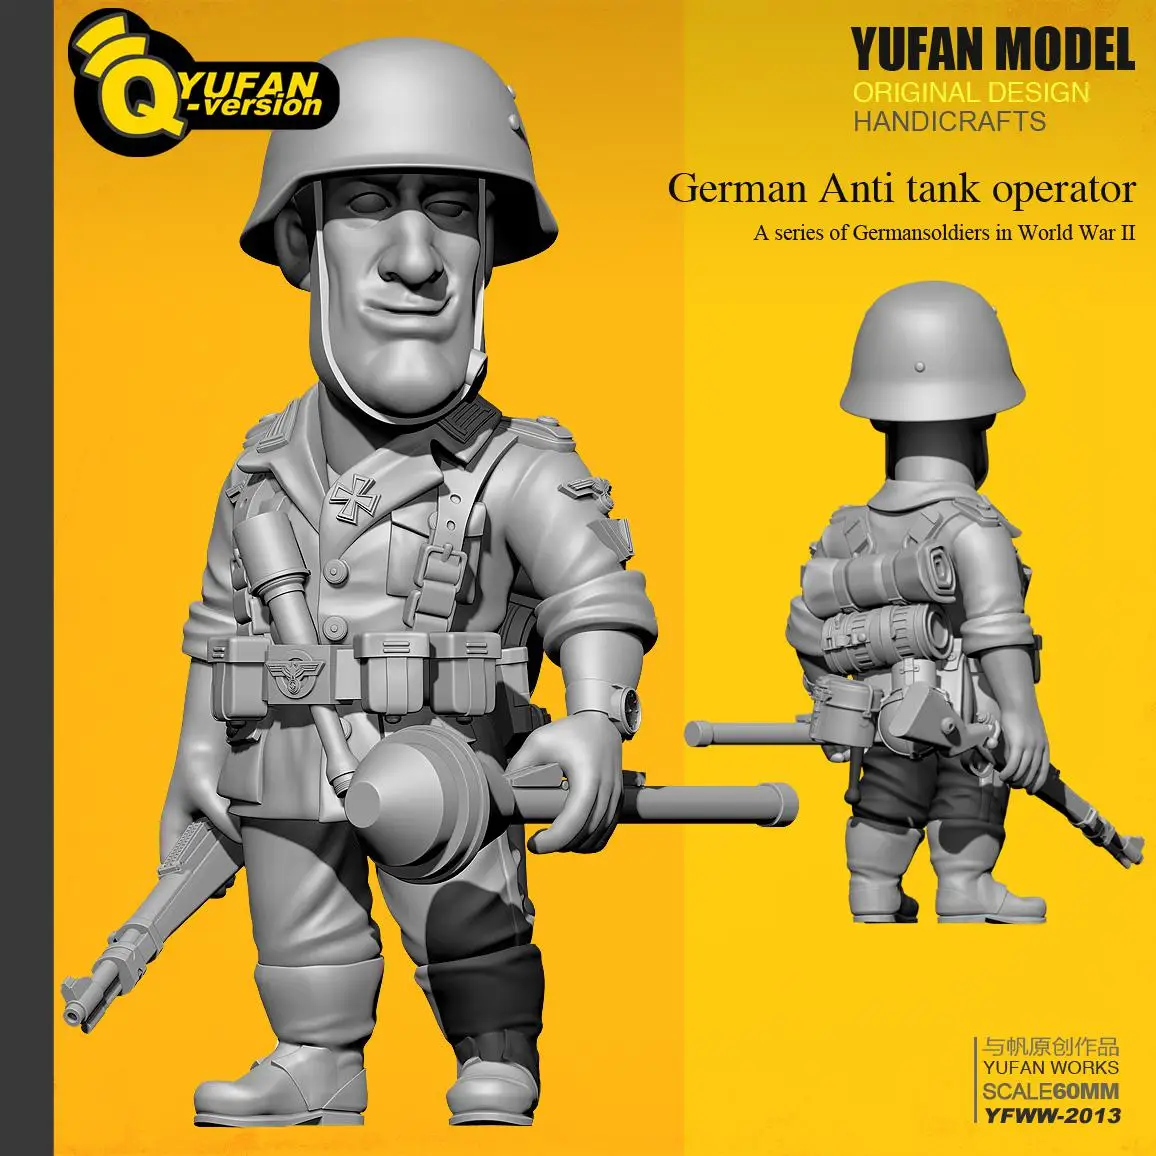 Yufan Model 1/32 Figure Kits Q Version Resin Soldier(60mm High) Yfww-2013 - Цвет: Серый